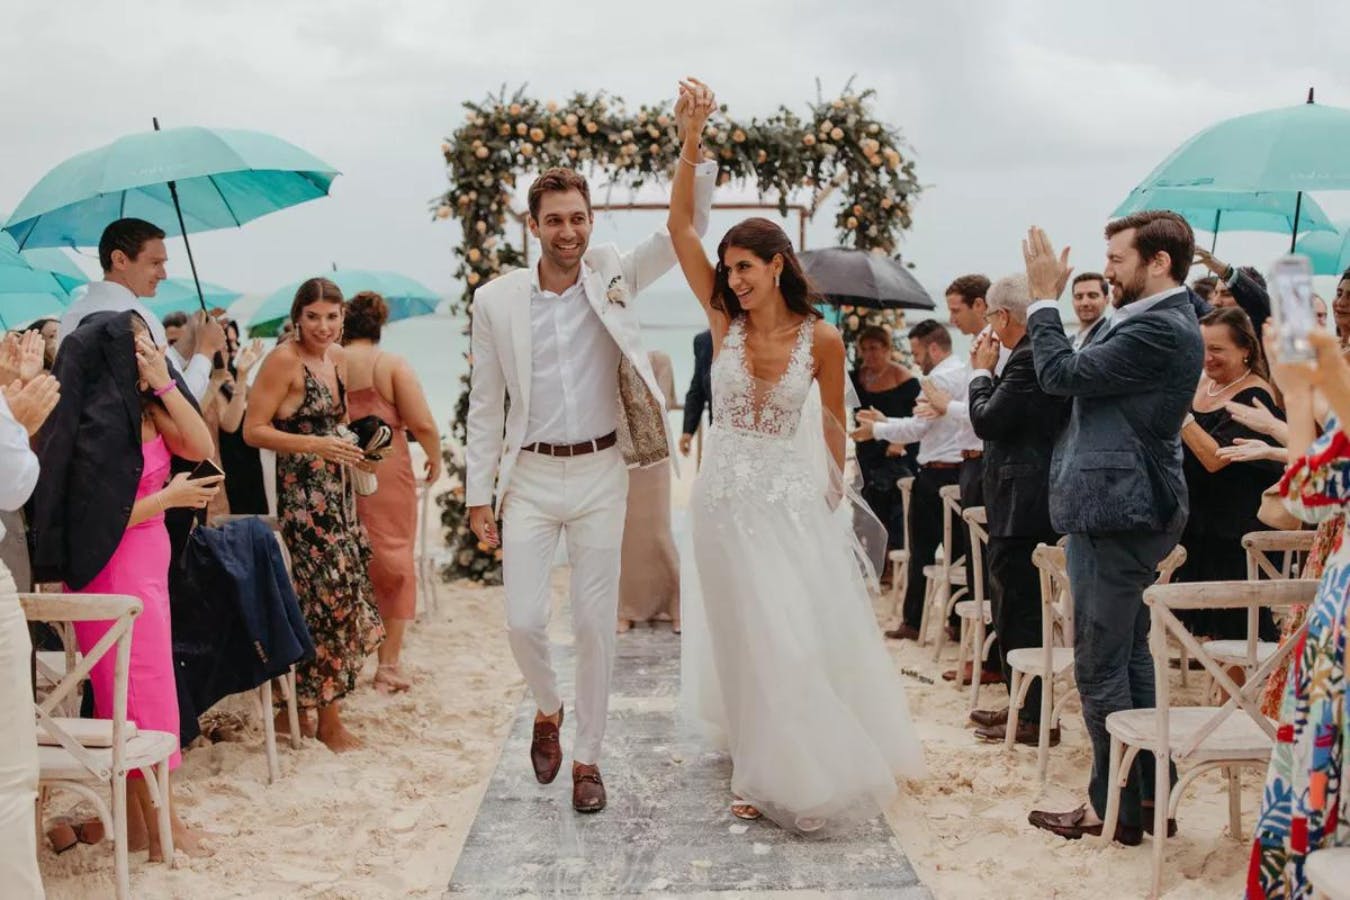 Jordana Abraham & Michael Marinelli’s Destination Wedding